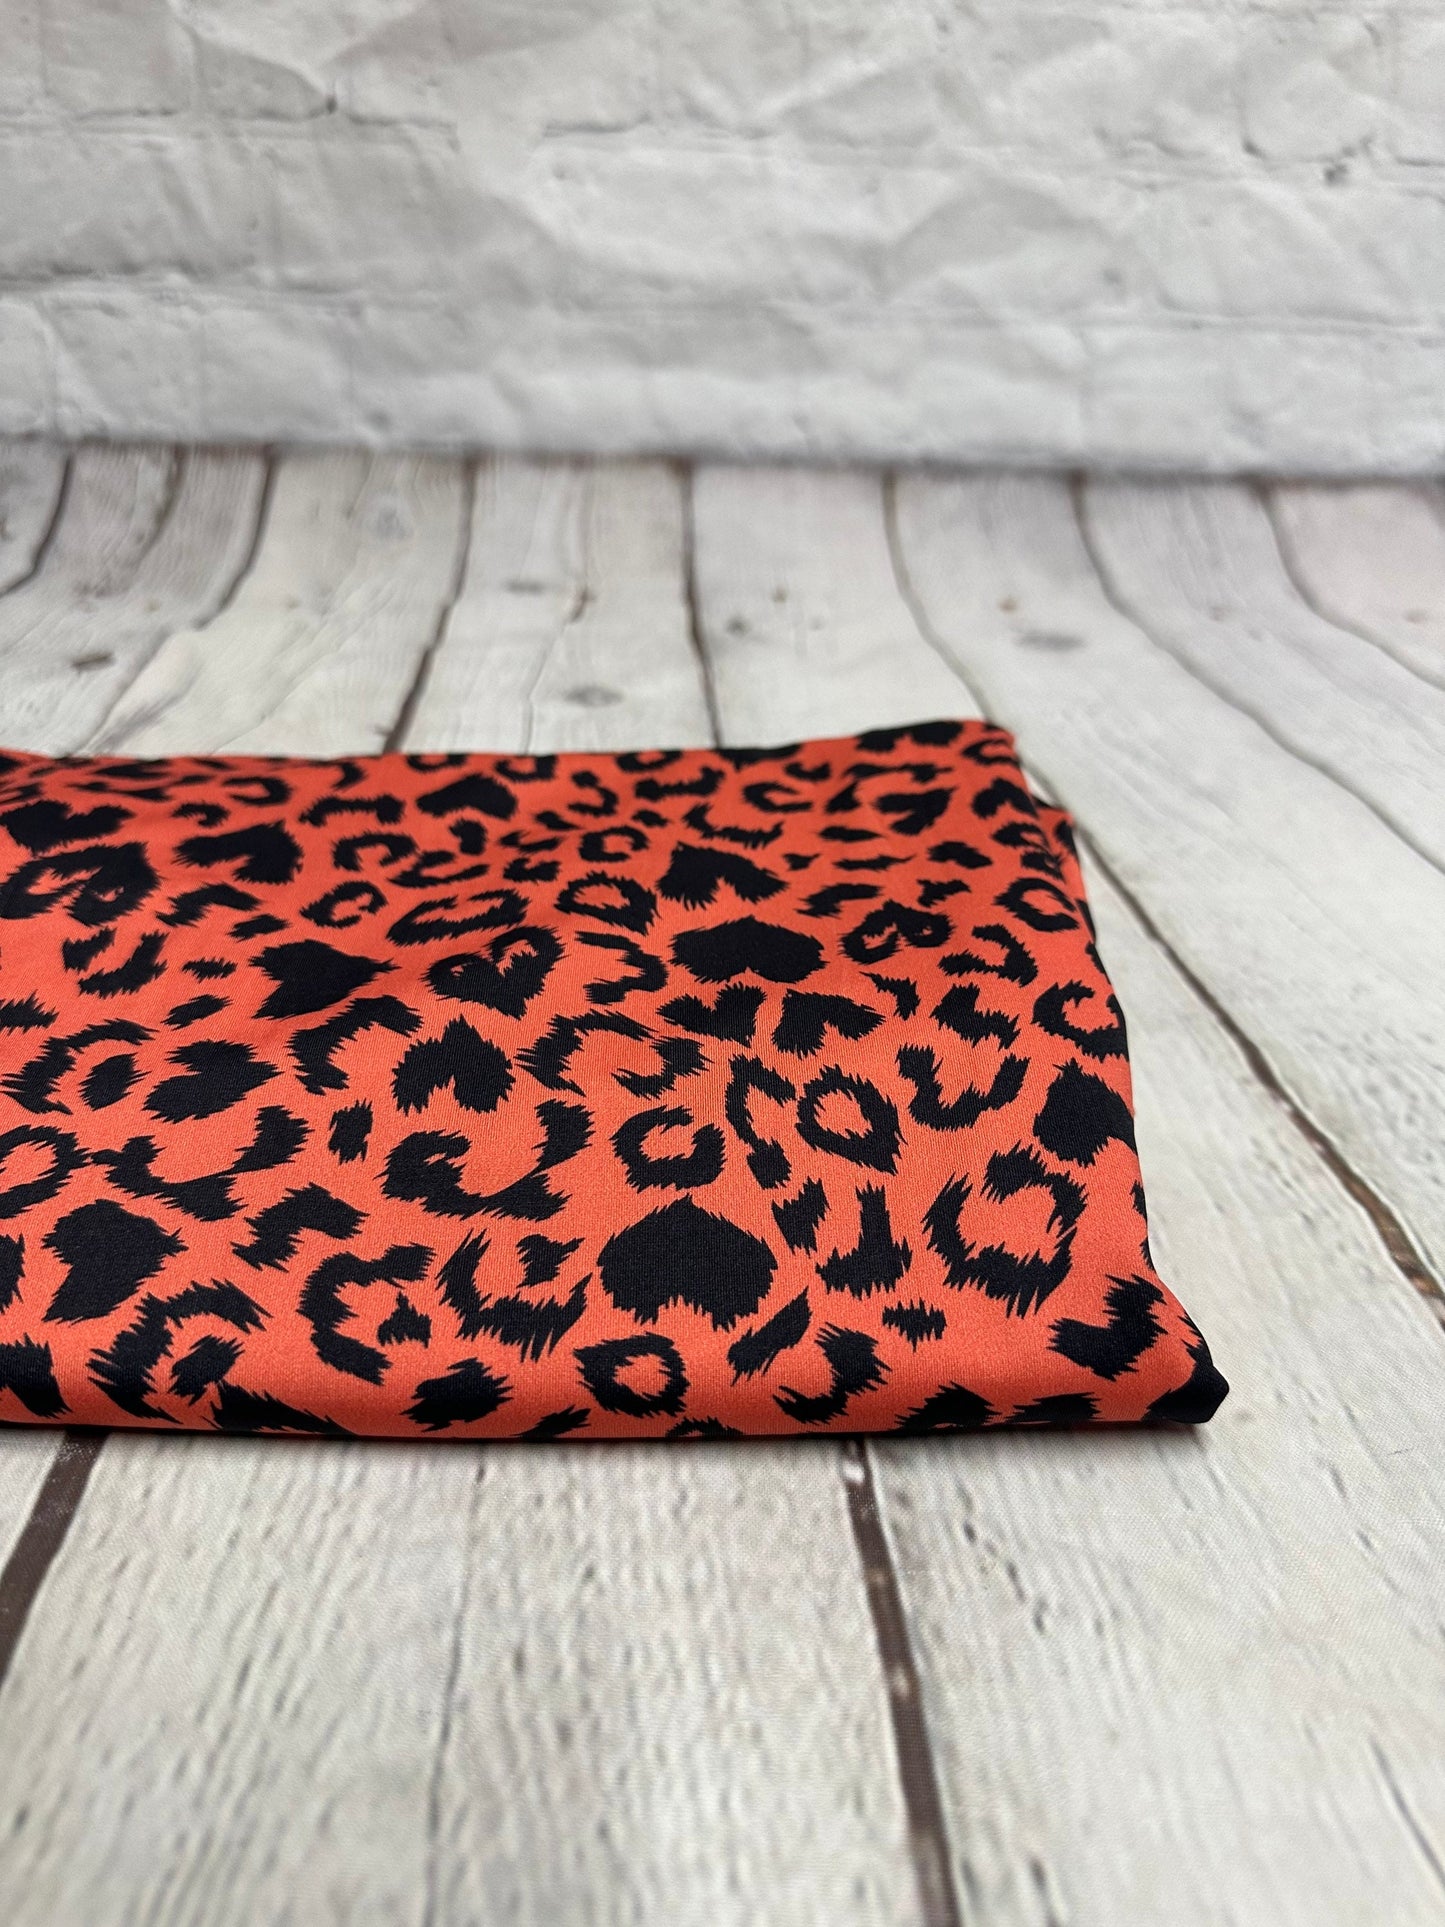 4 Way Stretch Print Nylon Spandex Fabric By The Yard Tricot Swim Wear Bikini Active Wear Leopard Animal Print 280 GSM